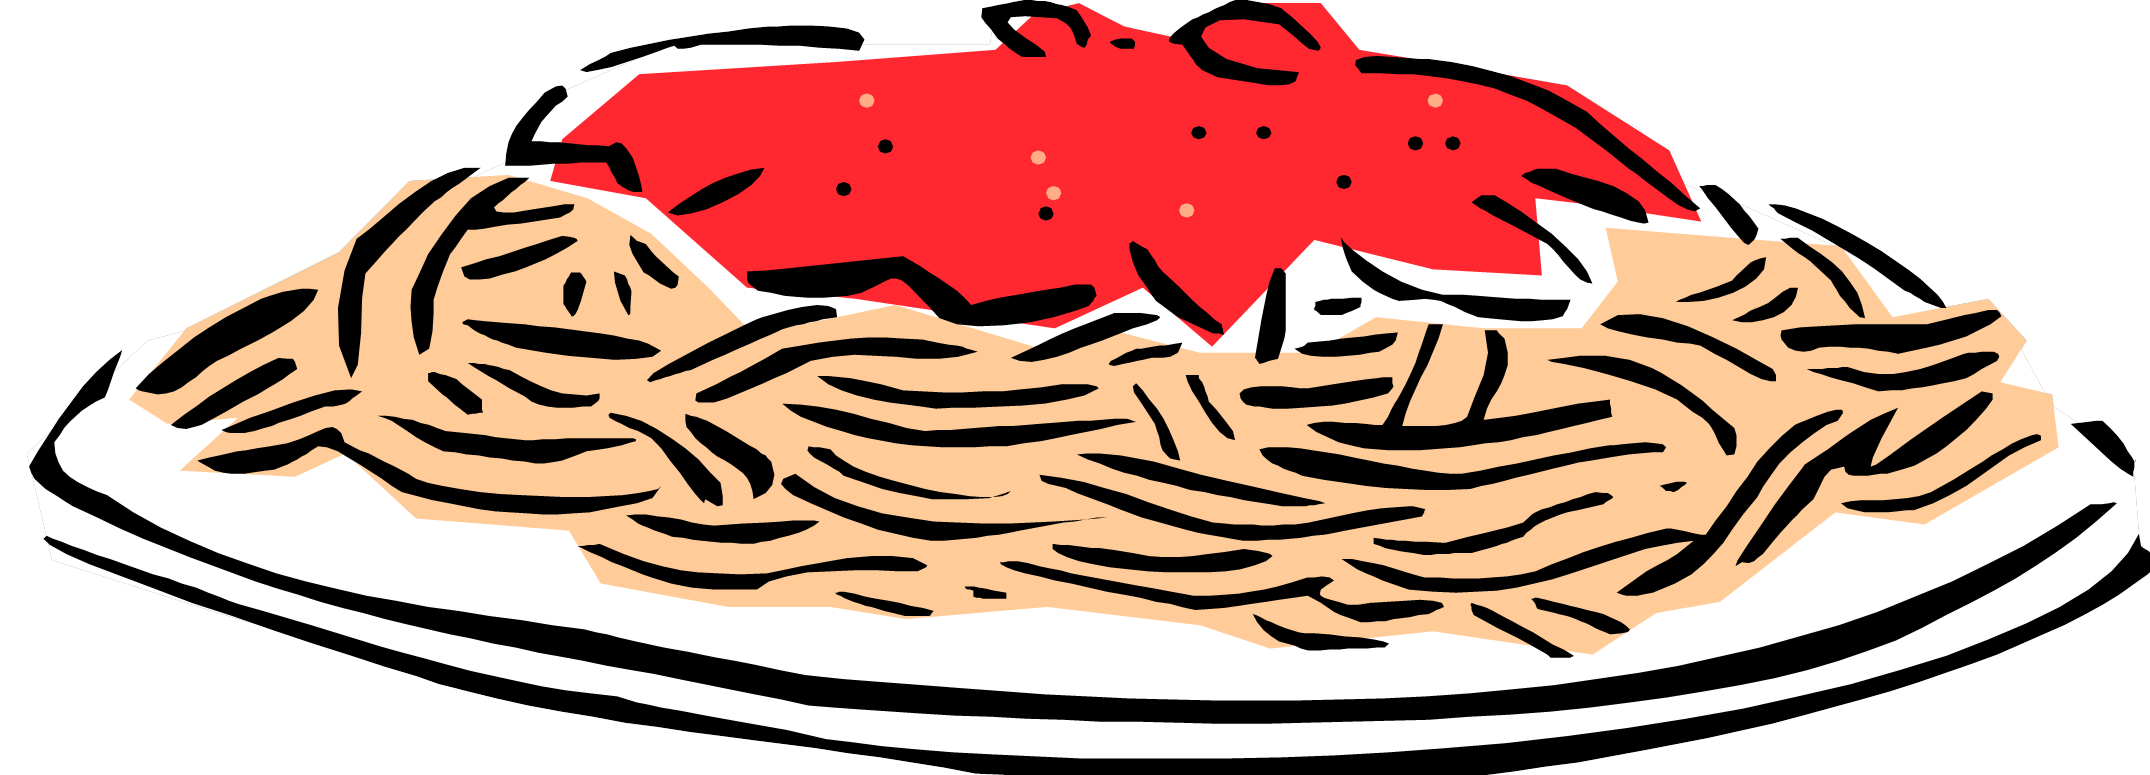 Spaghetti Clipart. Spaghetti Cartoon Download